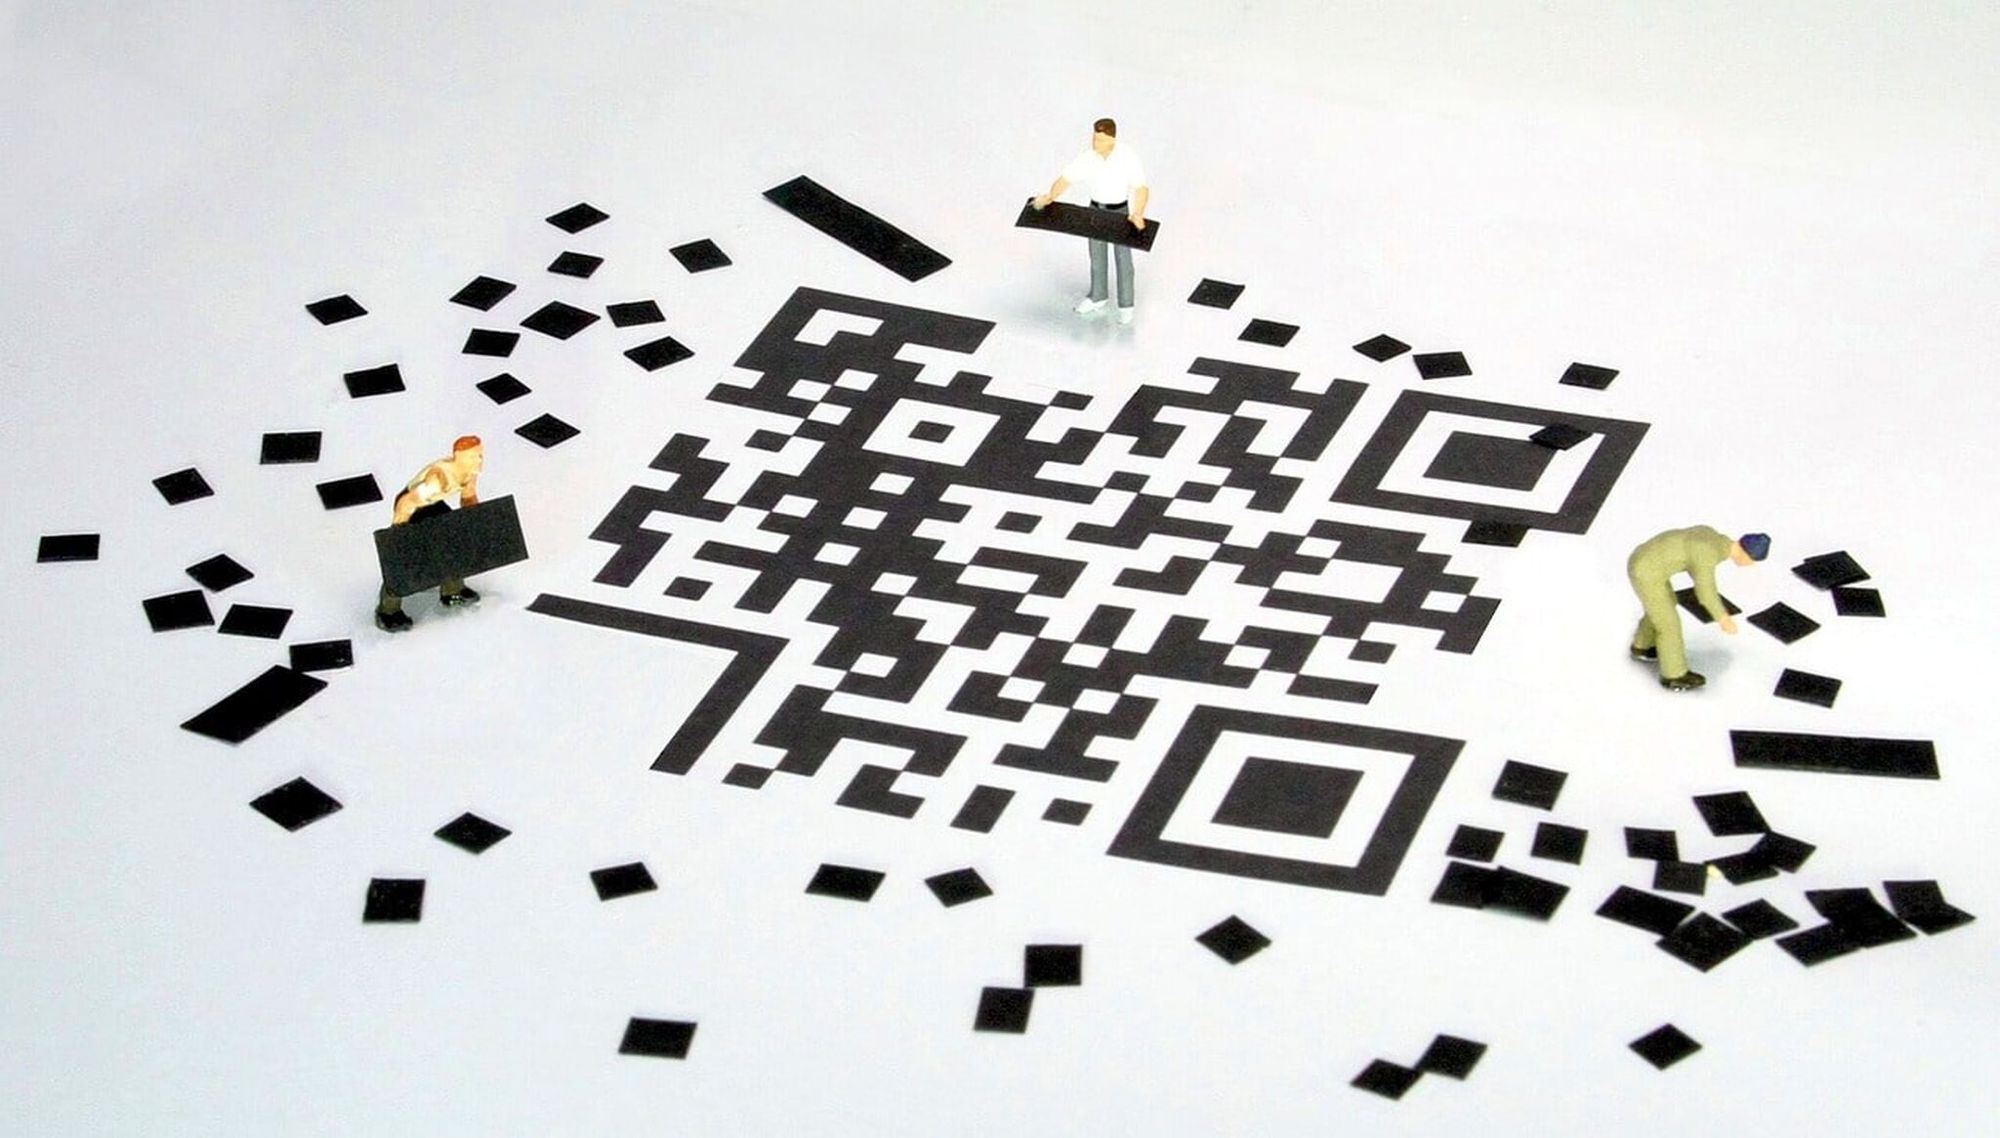 QR code with miniature figures